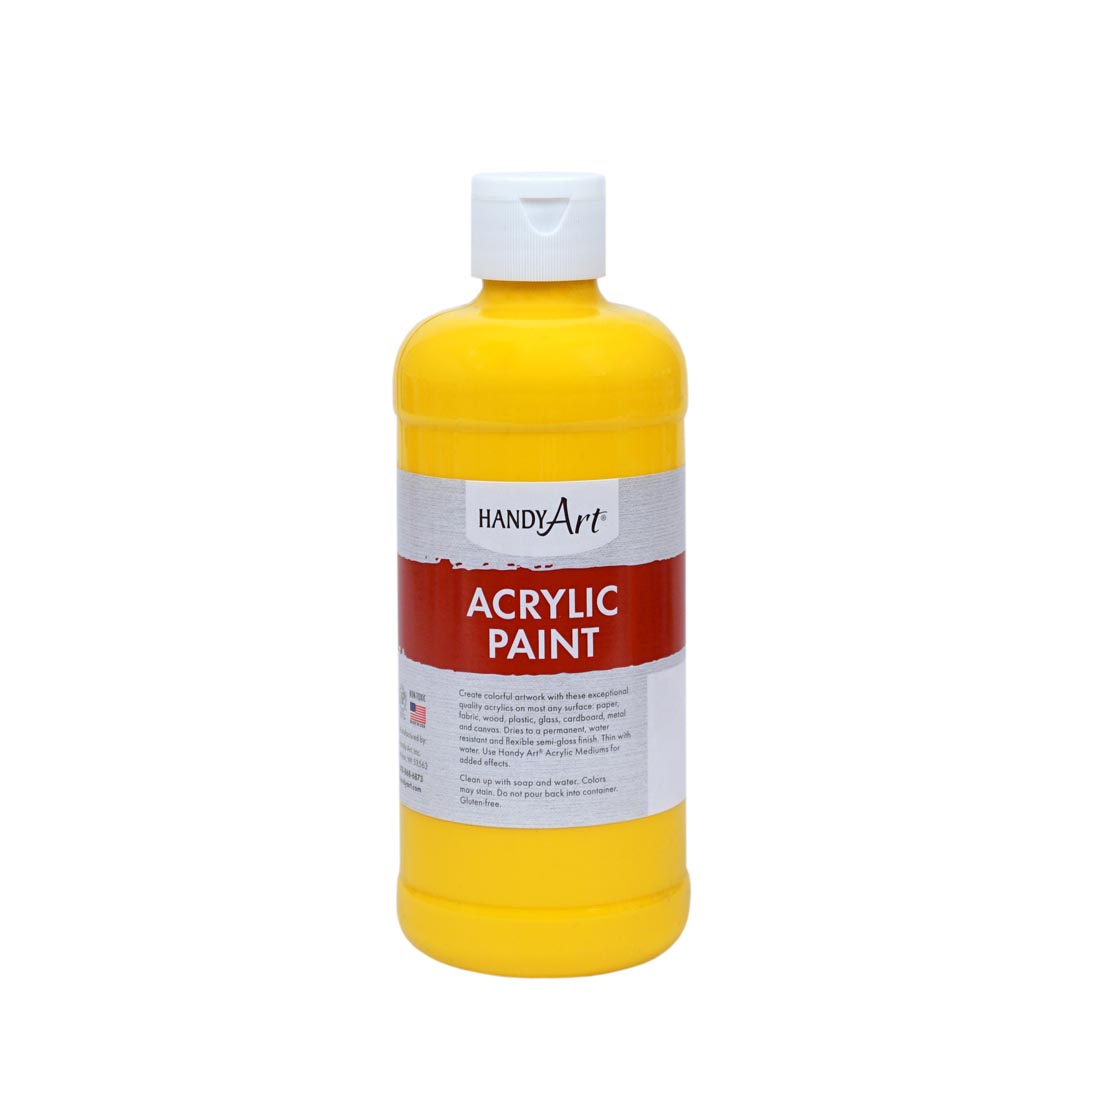 Pint Bottle of Primary Yellow Handy Art Acrylic Paint